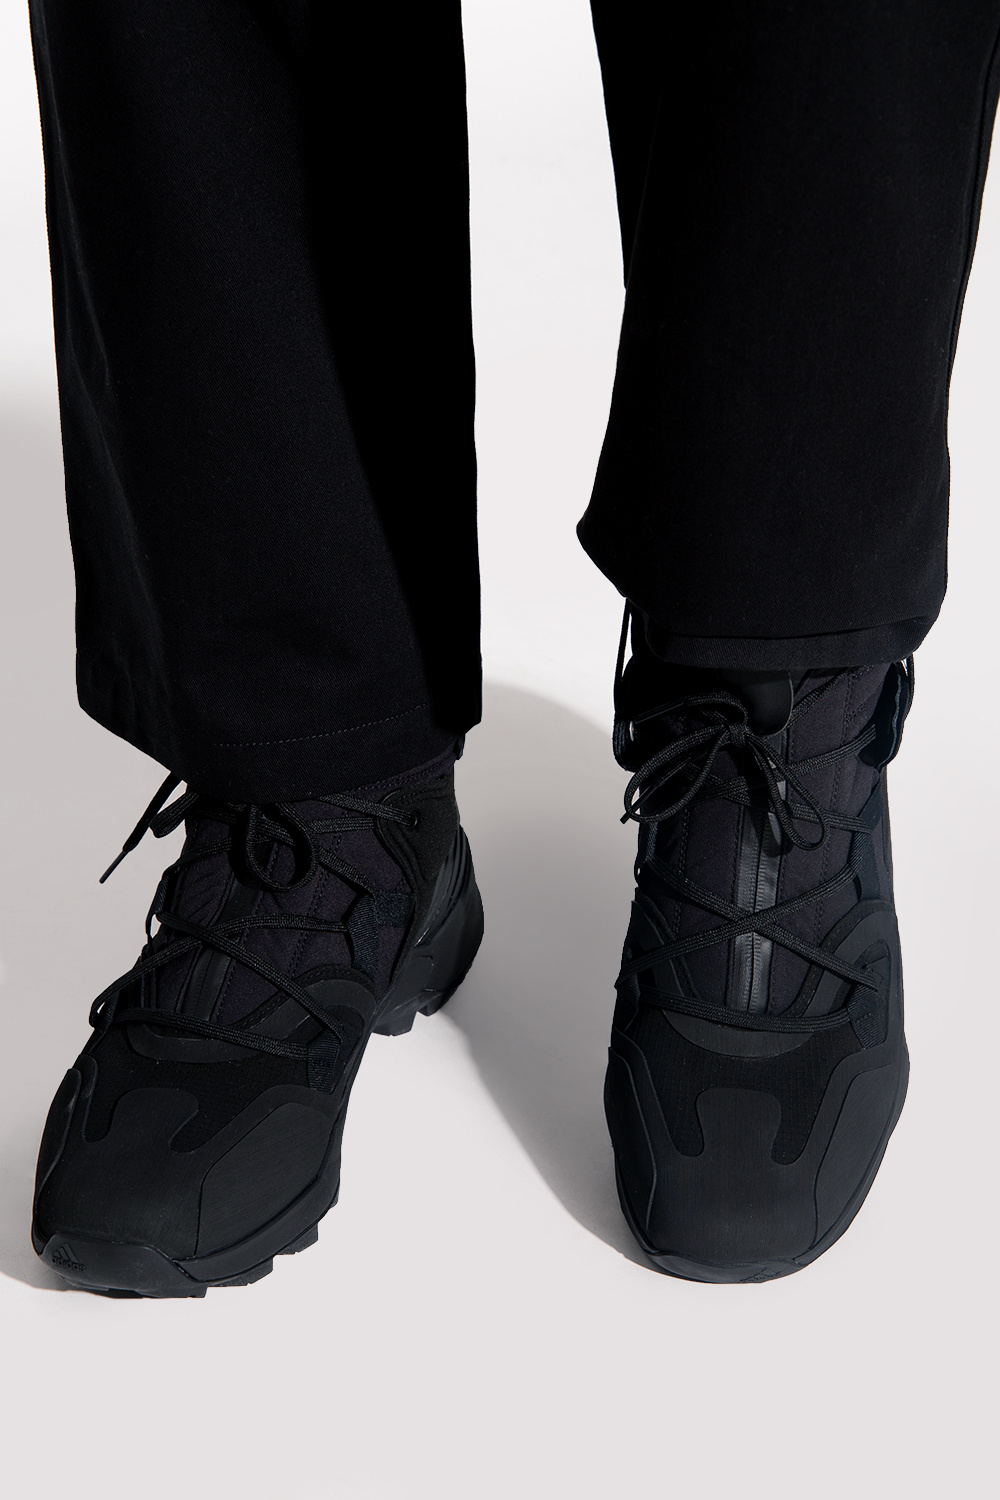 Y-3 Yohji Yamamoto ‘Terrex Swift R3 GTX’ sneakers